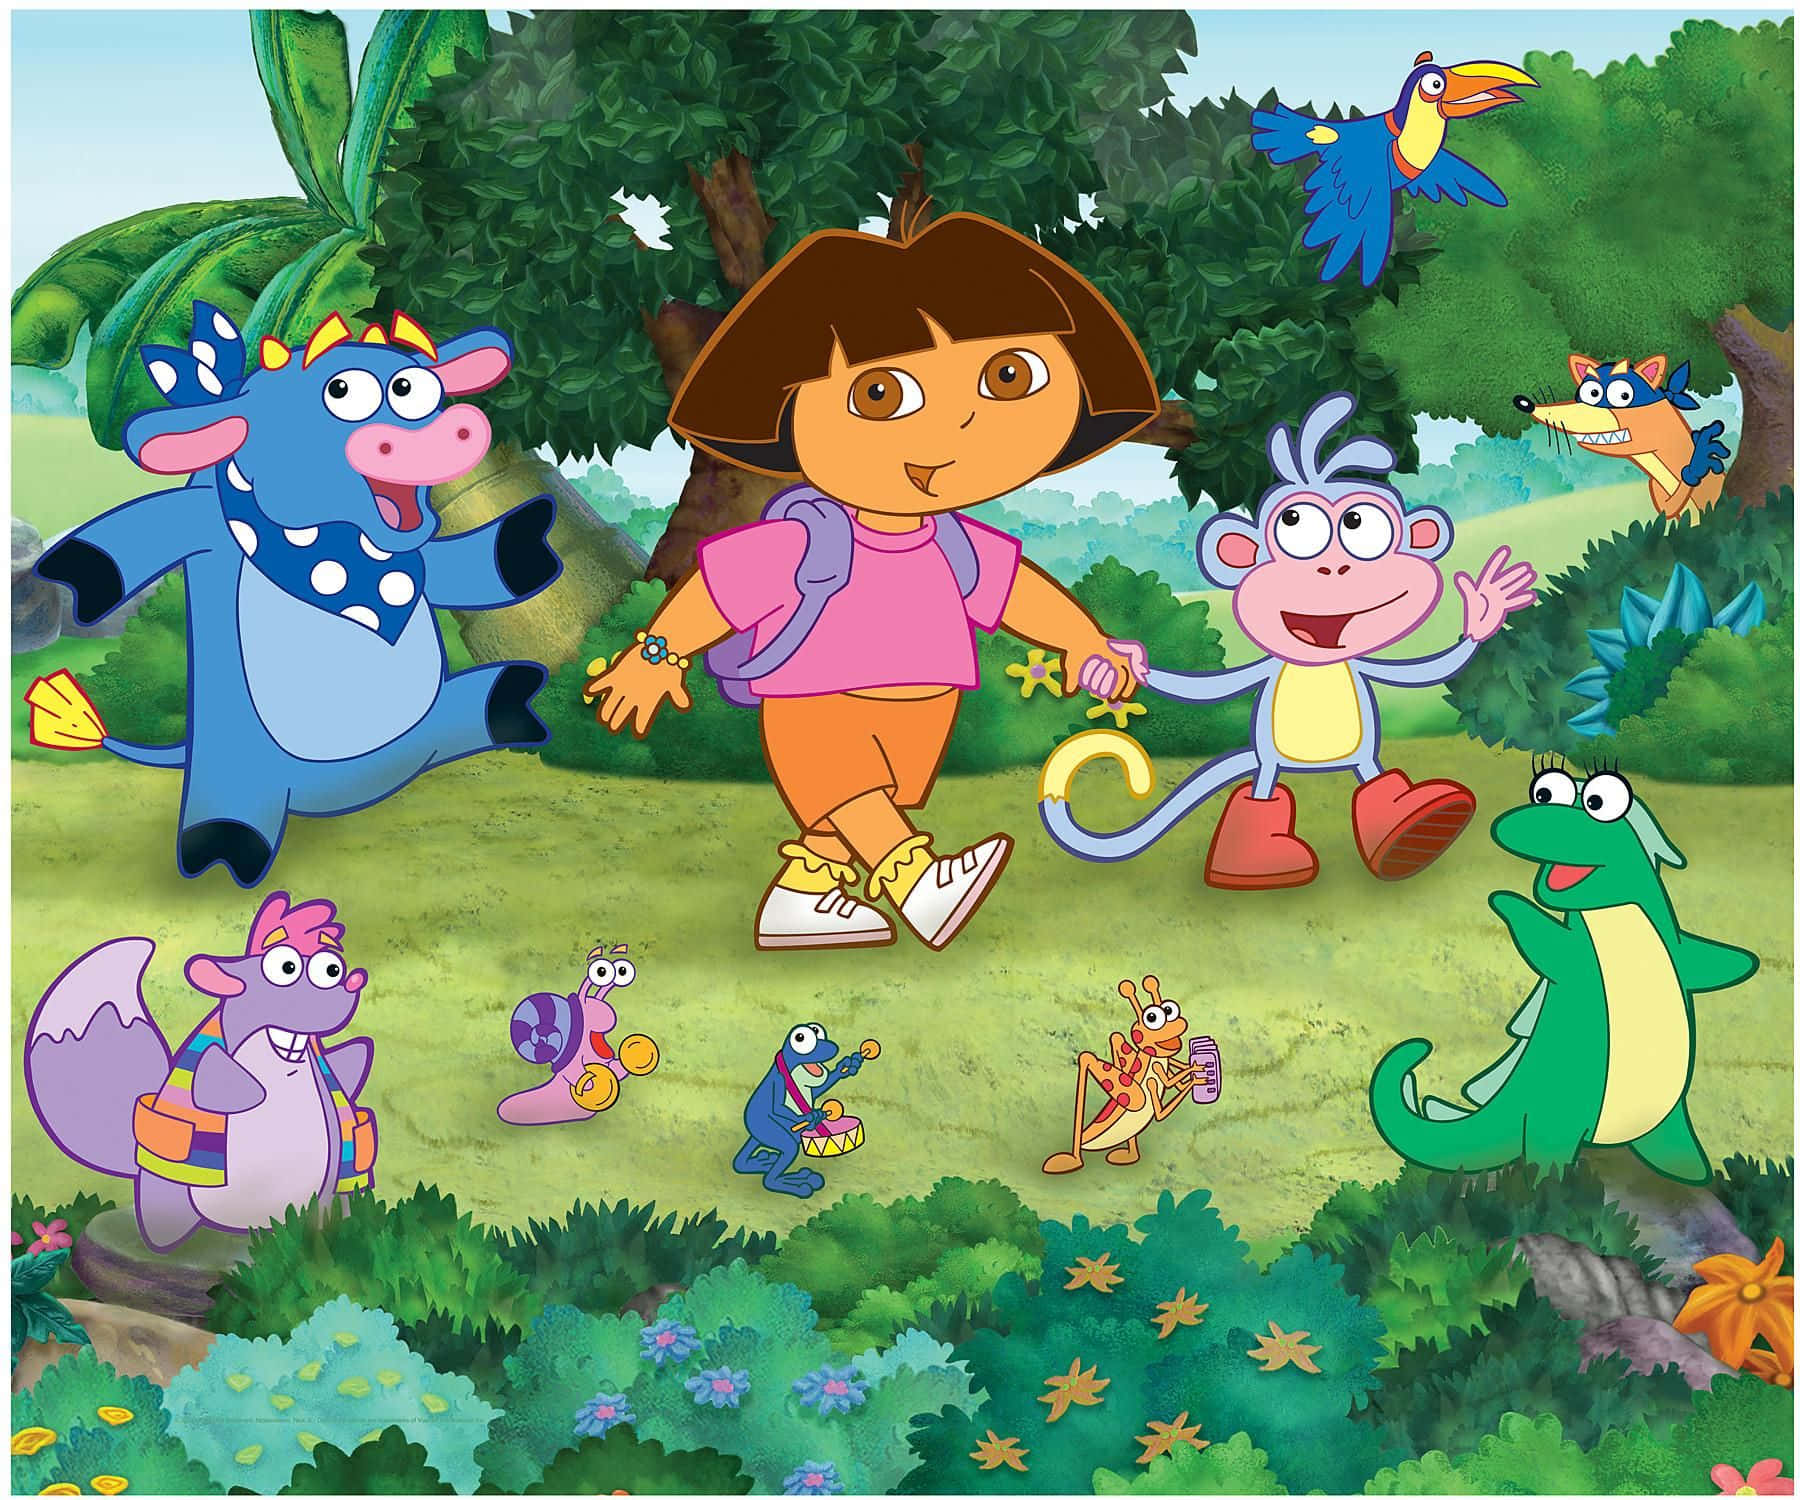 Everyone loves a bit of Dora mischief! Wallpaper